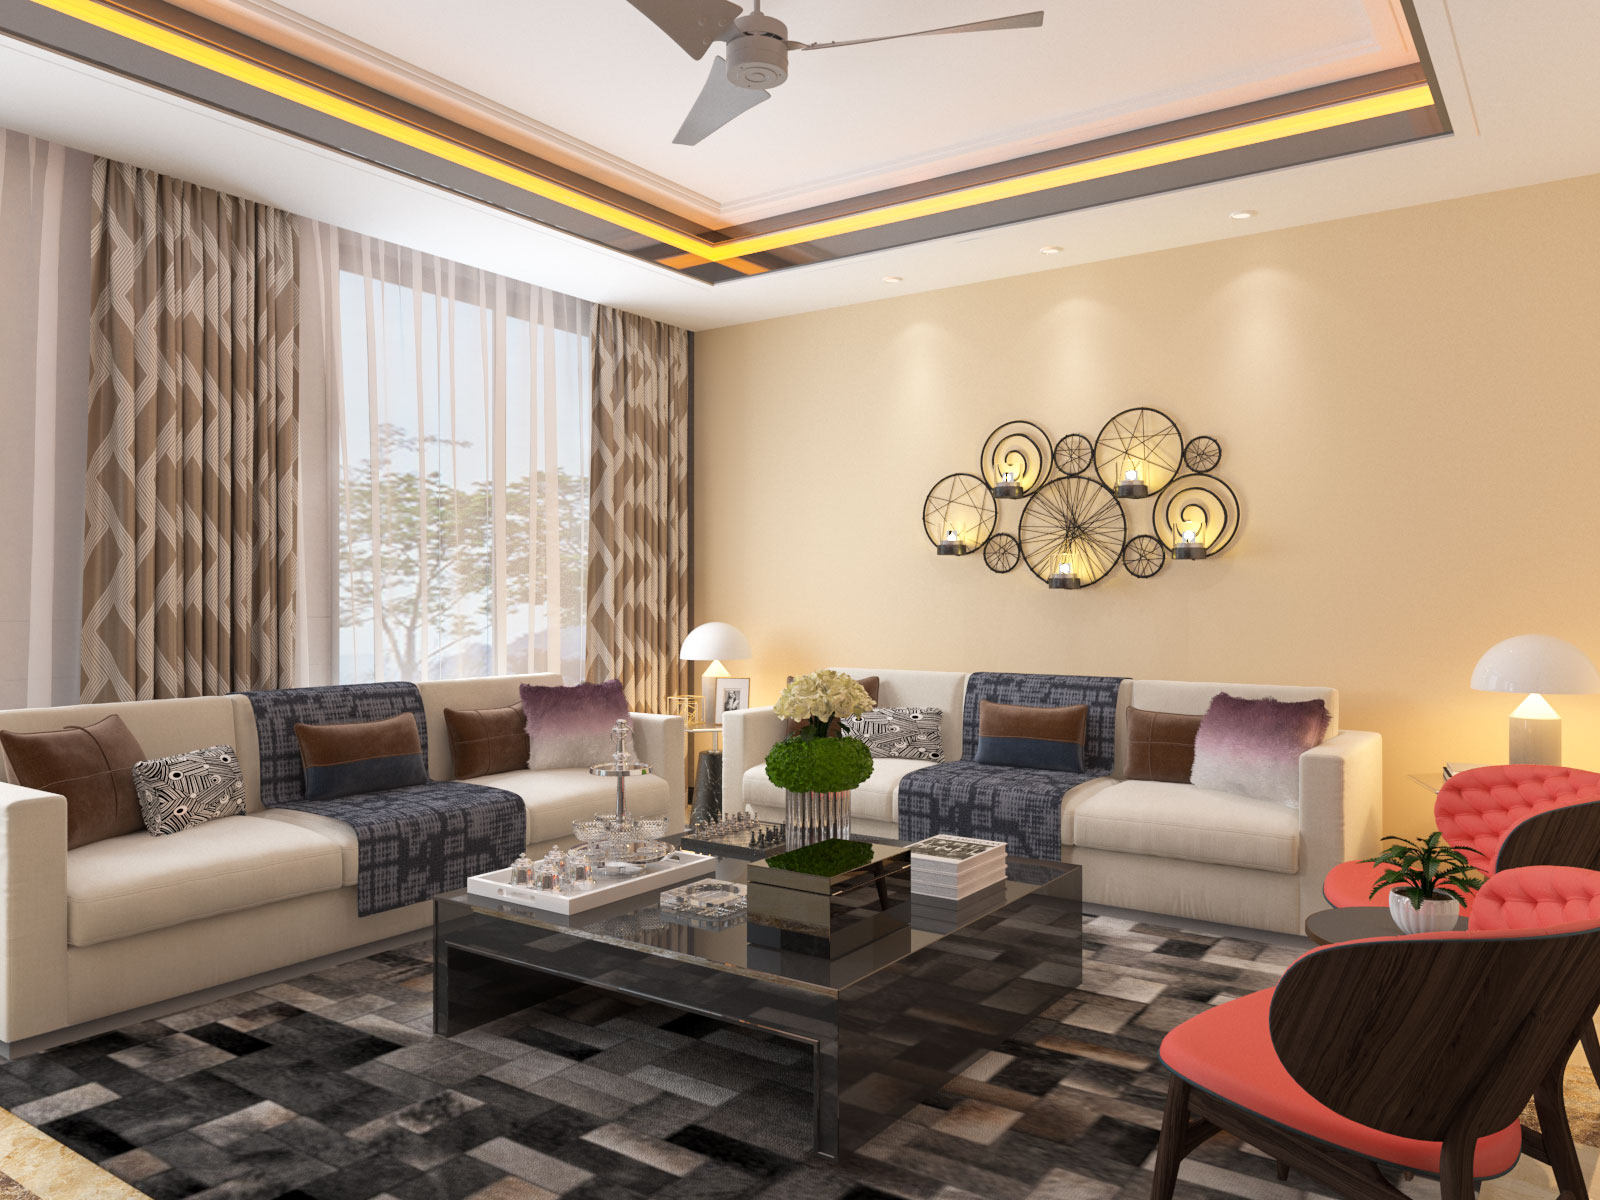 Indian Homes & Design Ideas for Living Room, Bedroom, Kitchen | Designideas